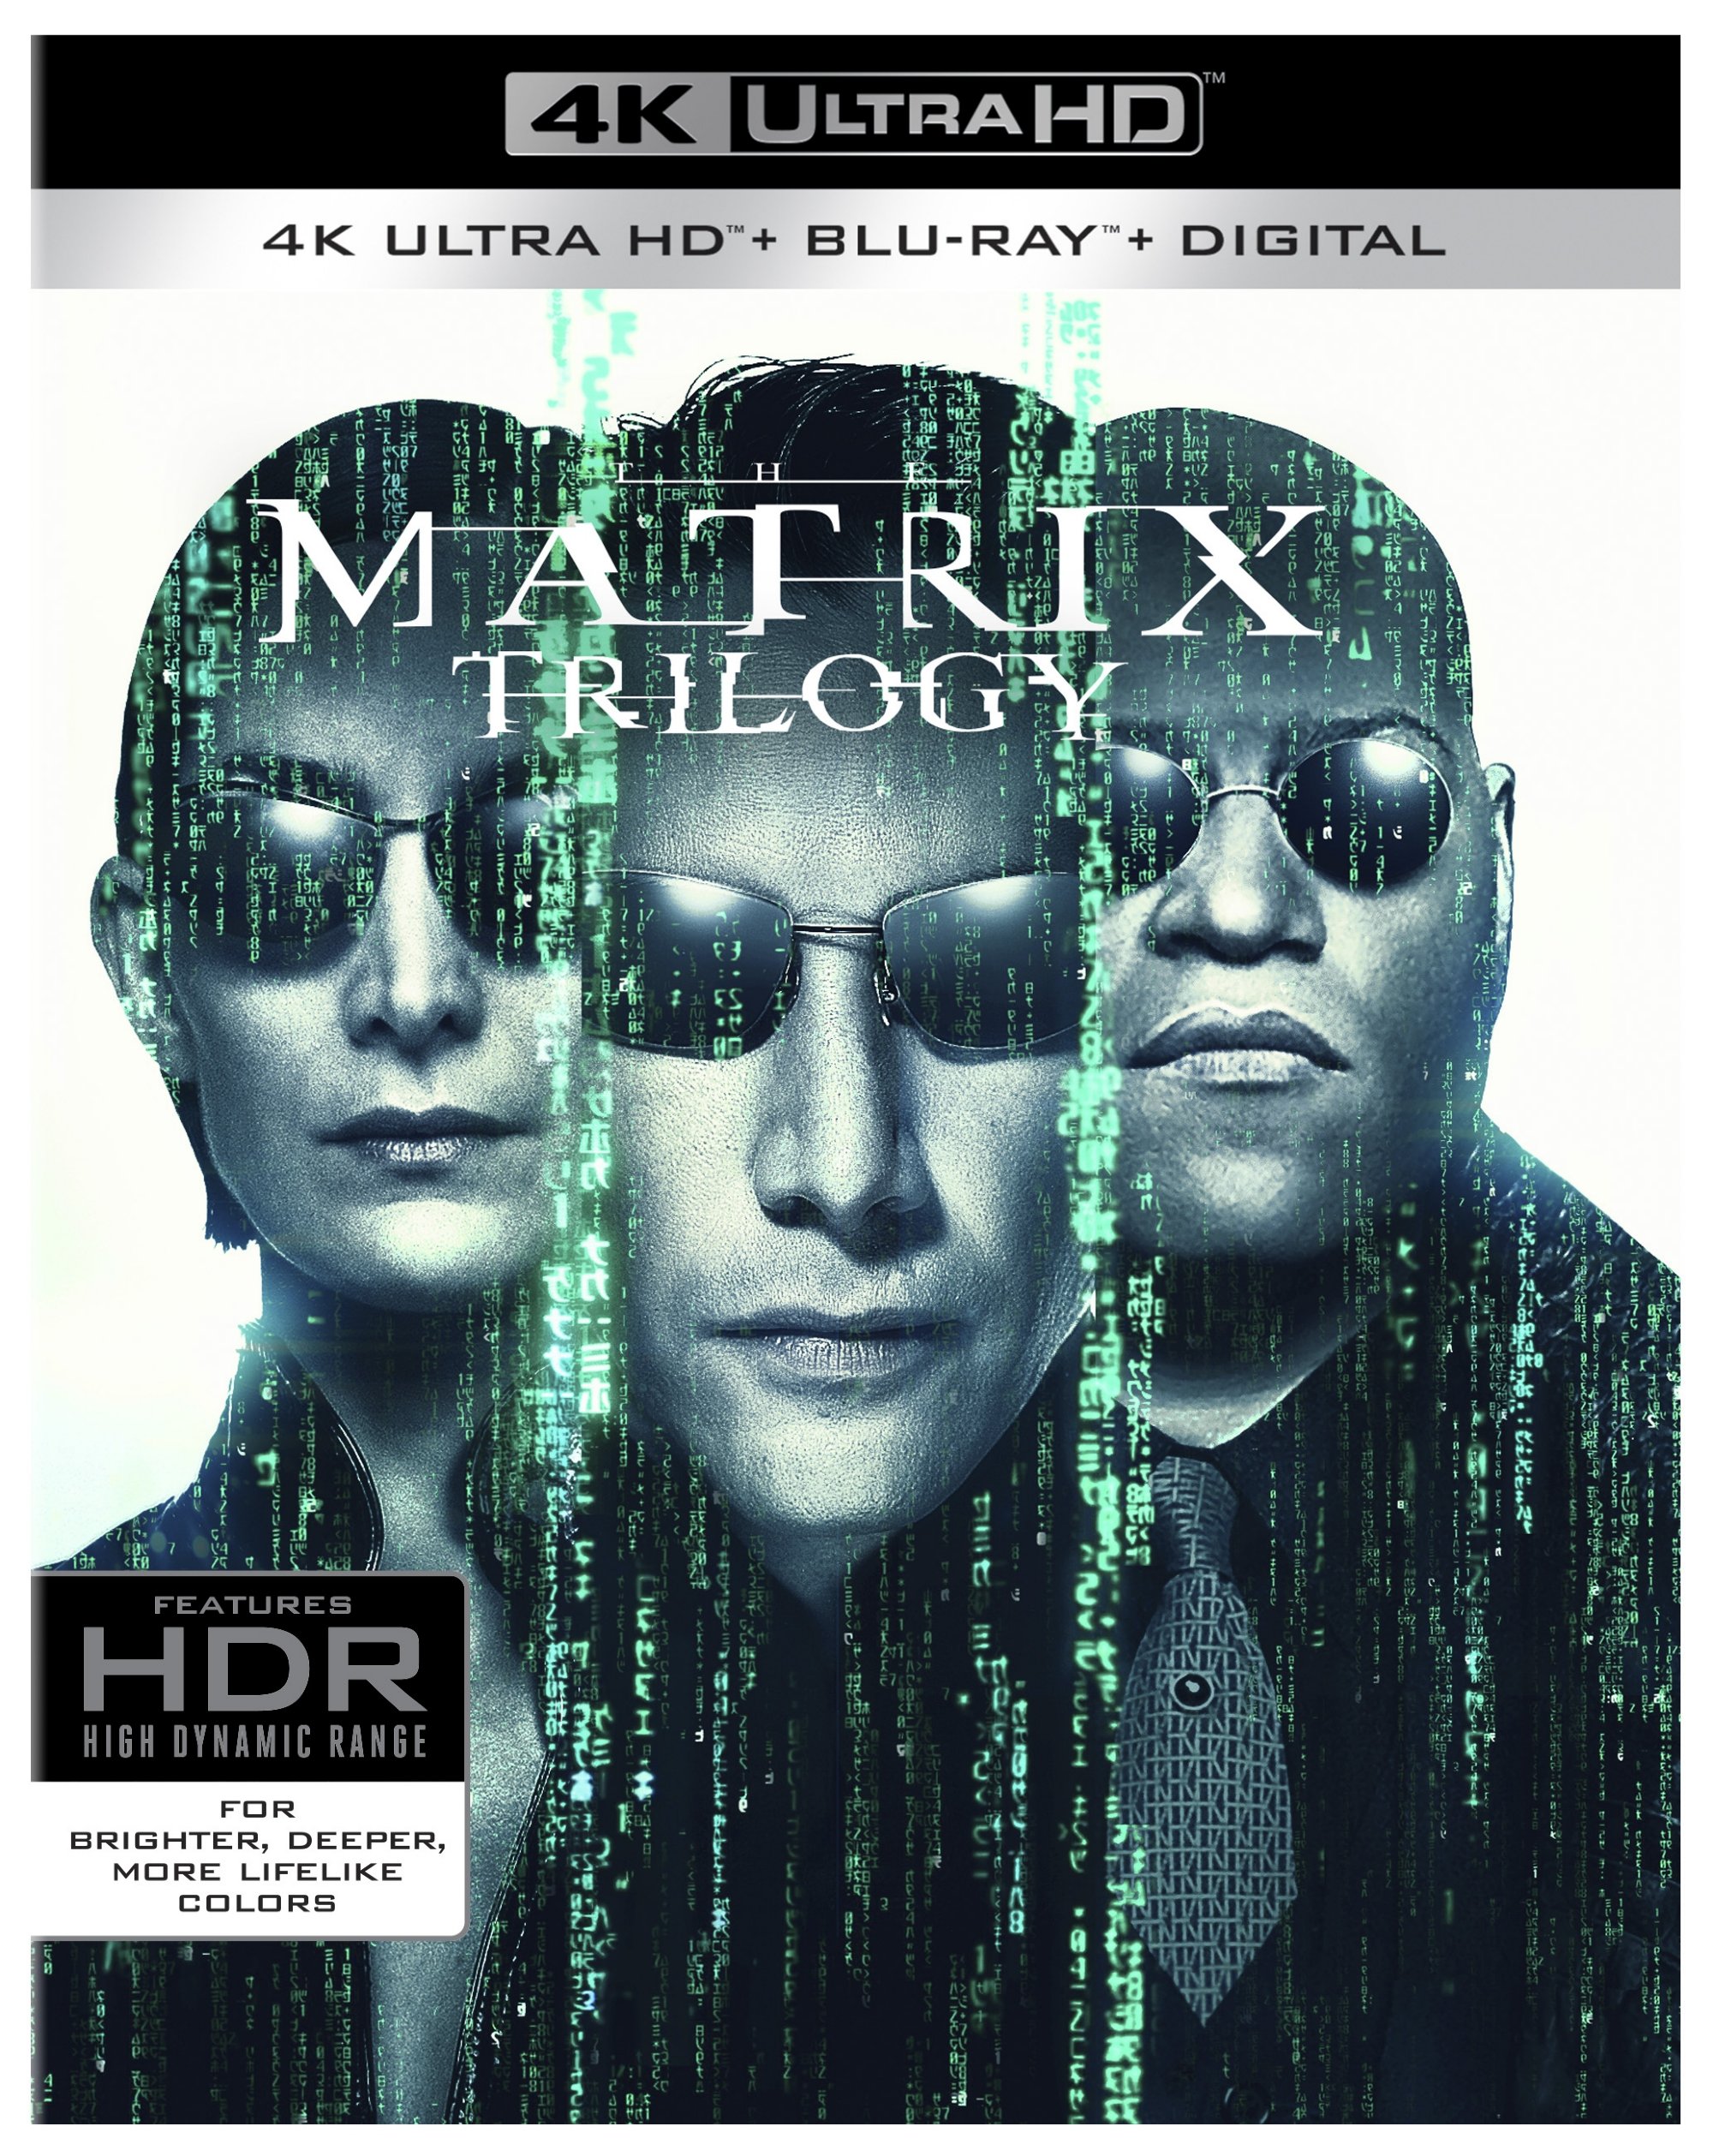 the matrix series